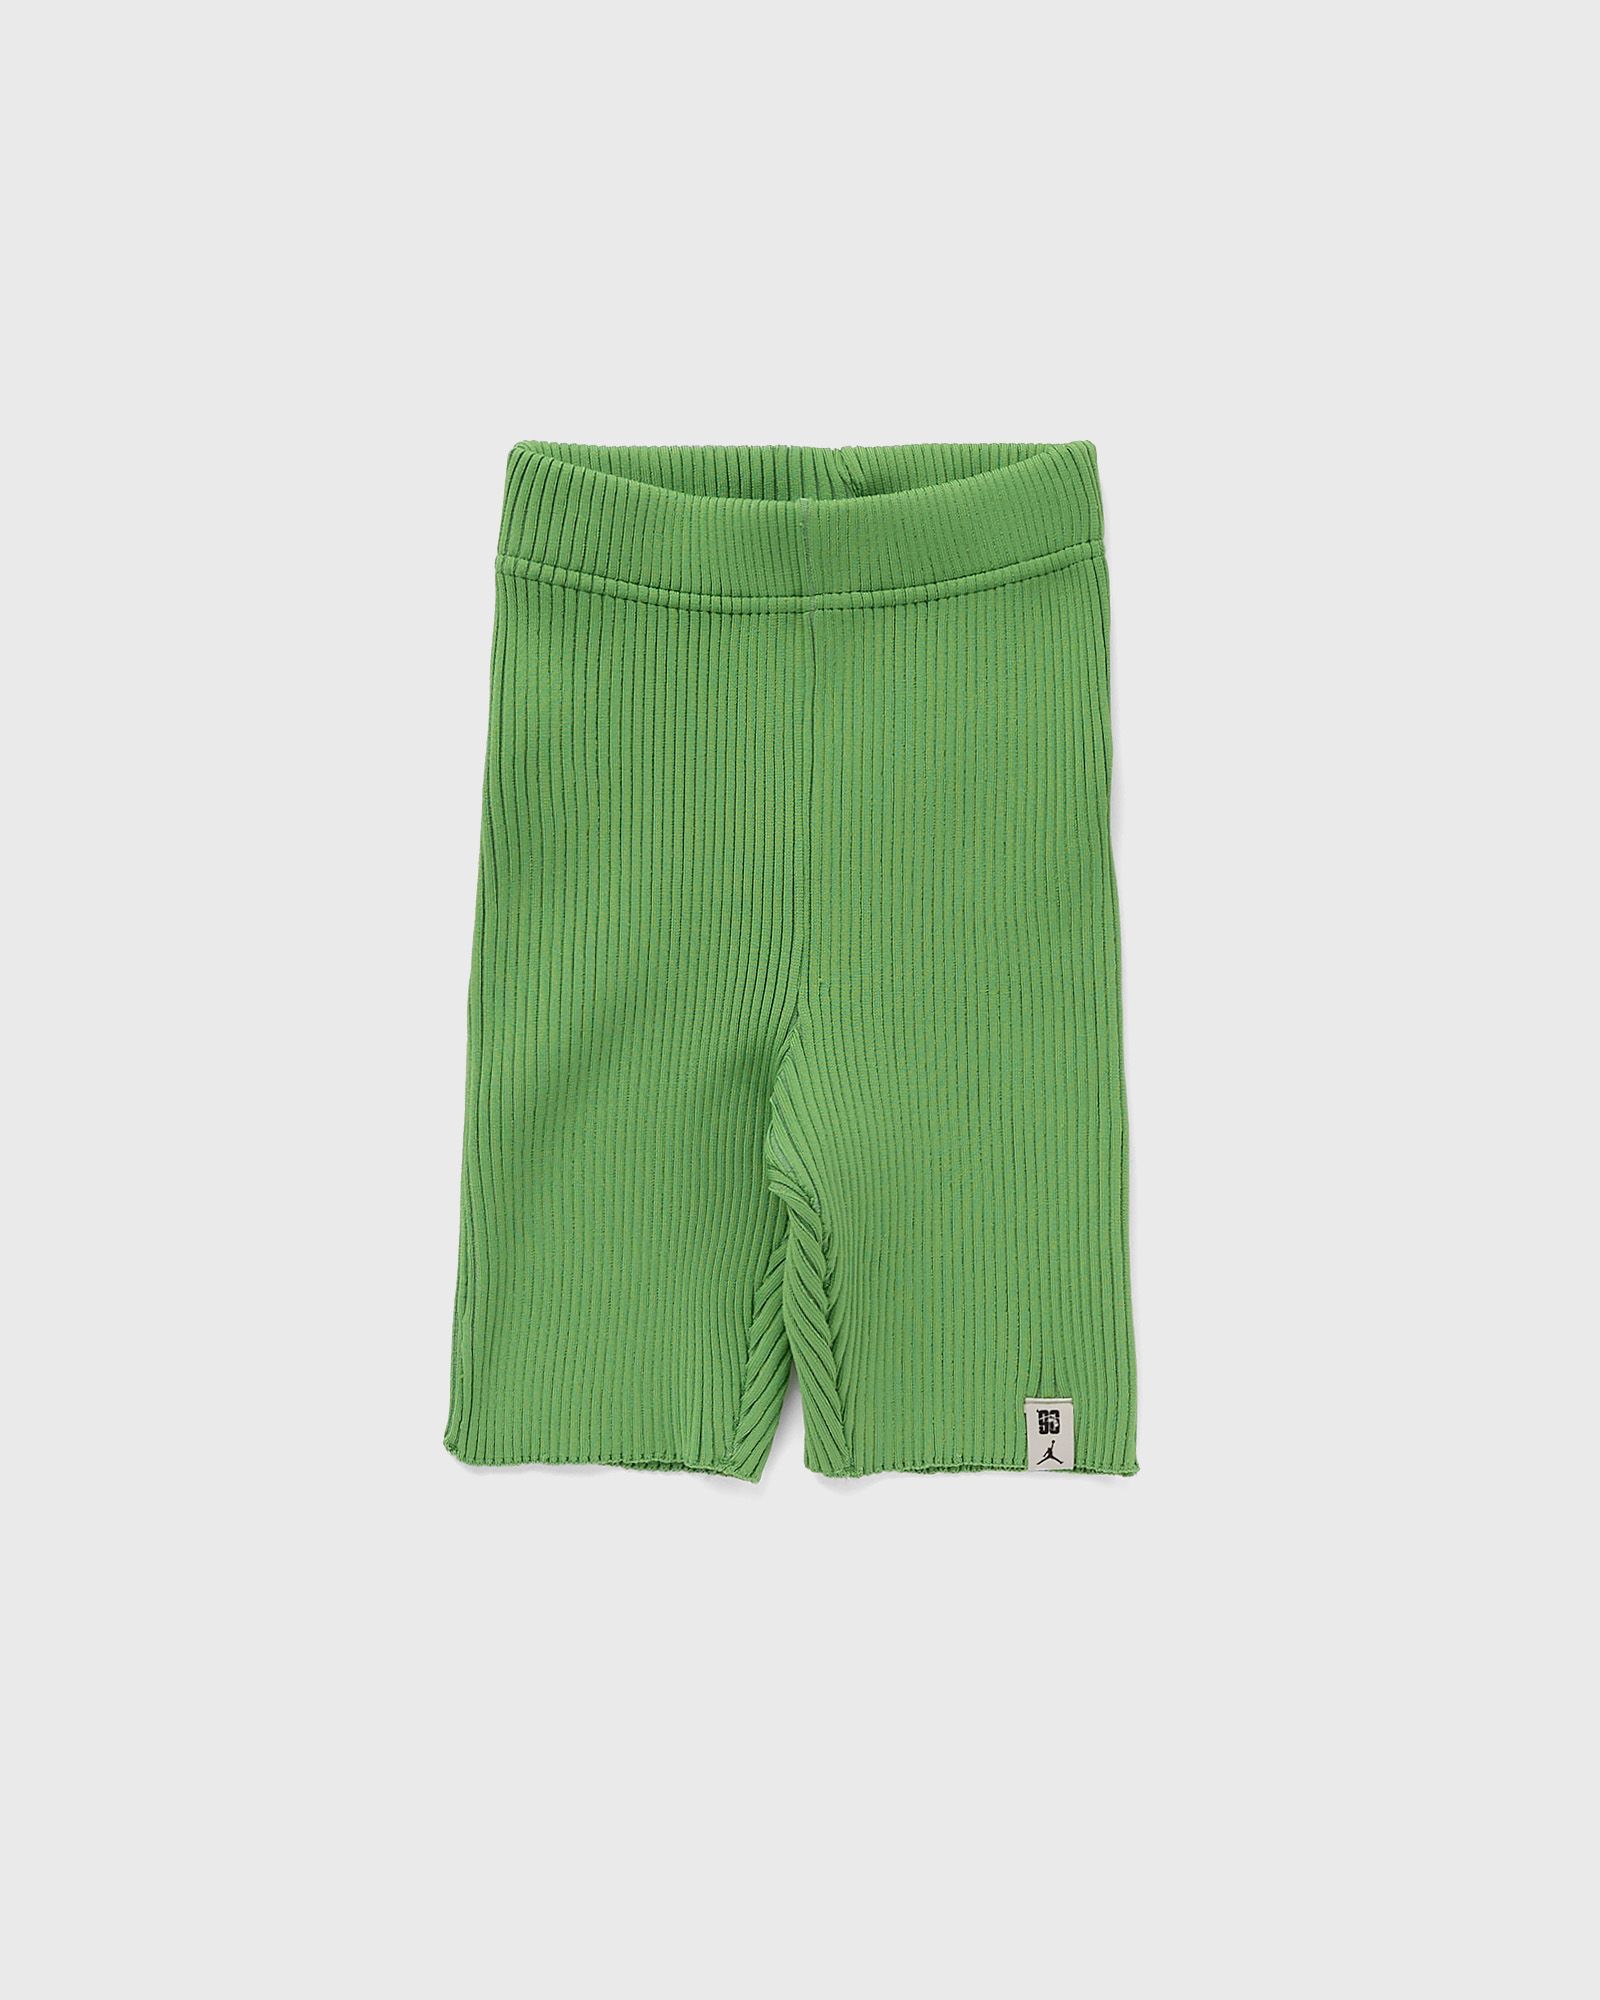 Jordan - x union x bephies beauty supply wmns biking short women sport & team shorts green in größe:xs